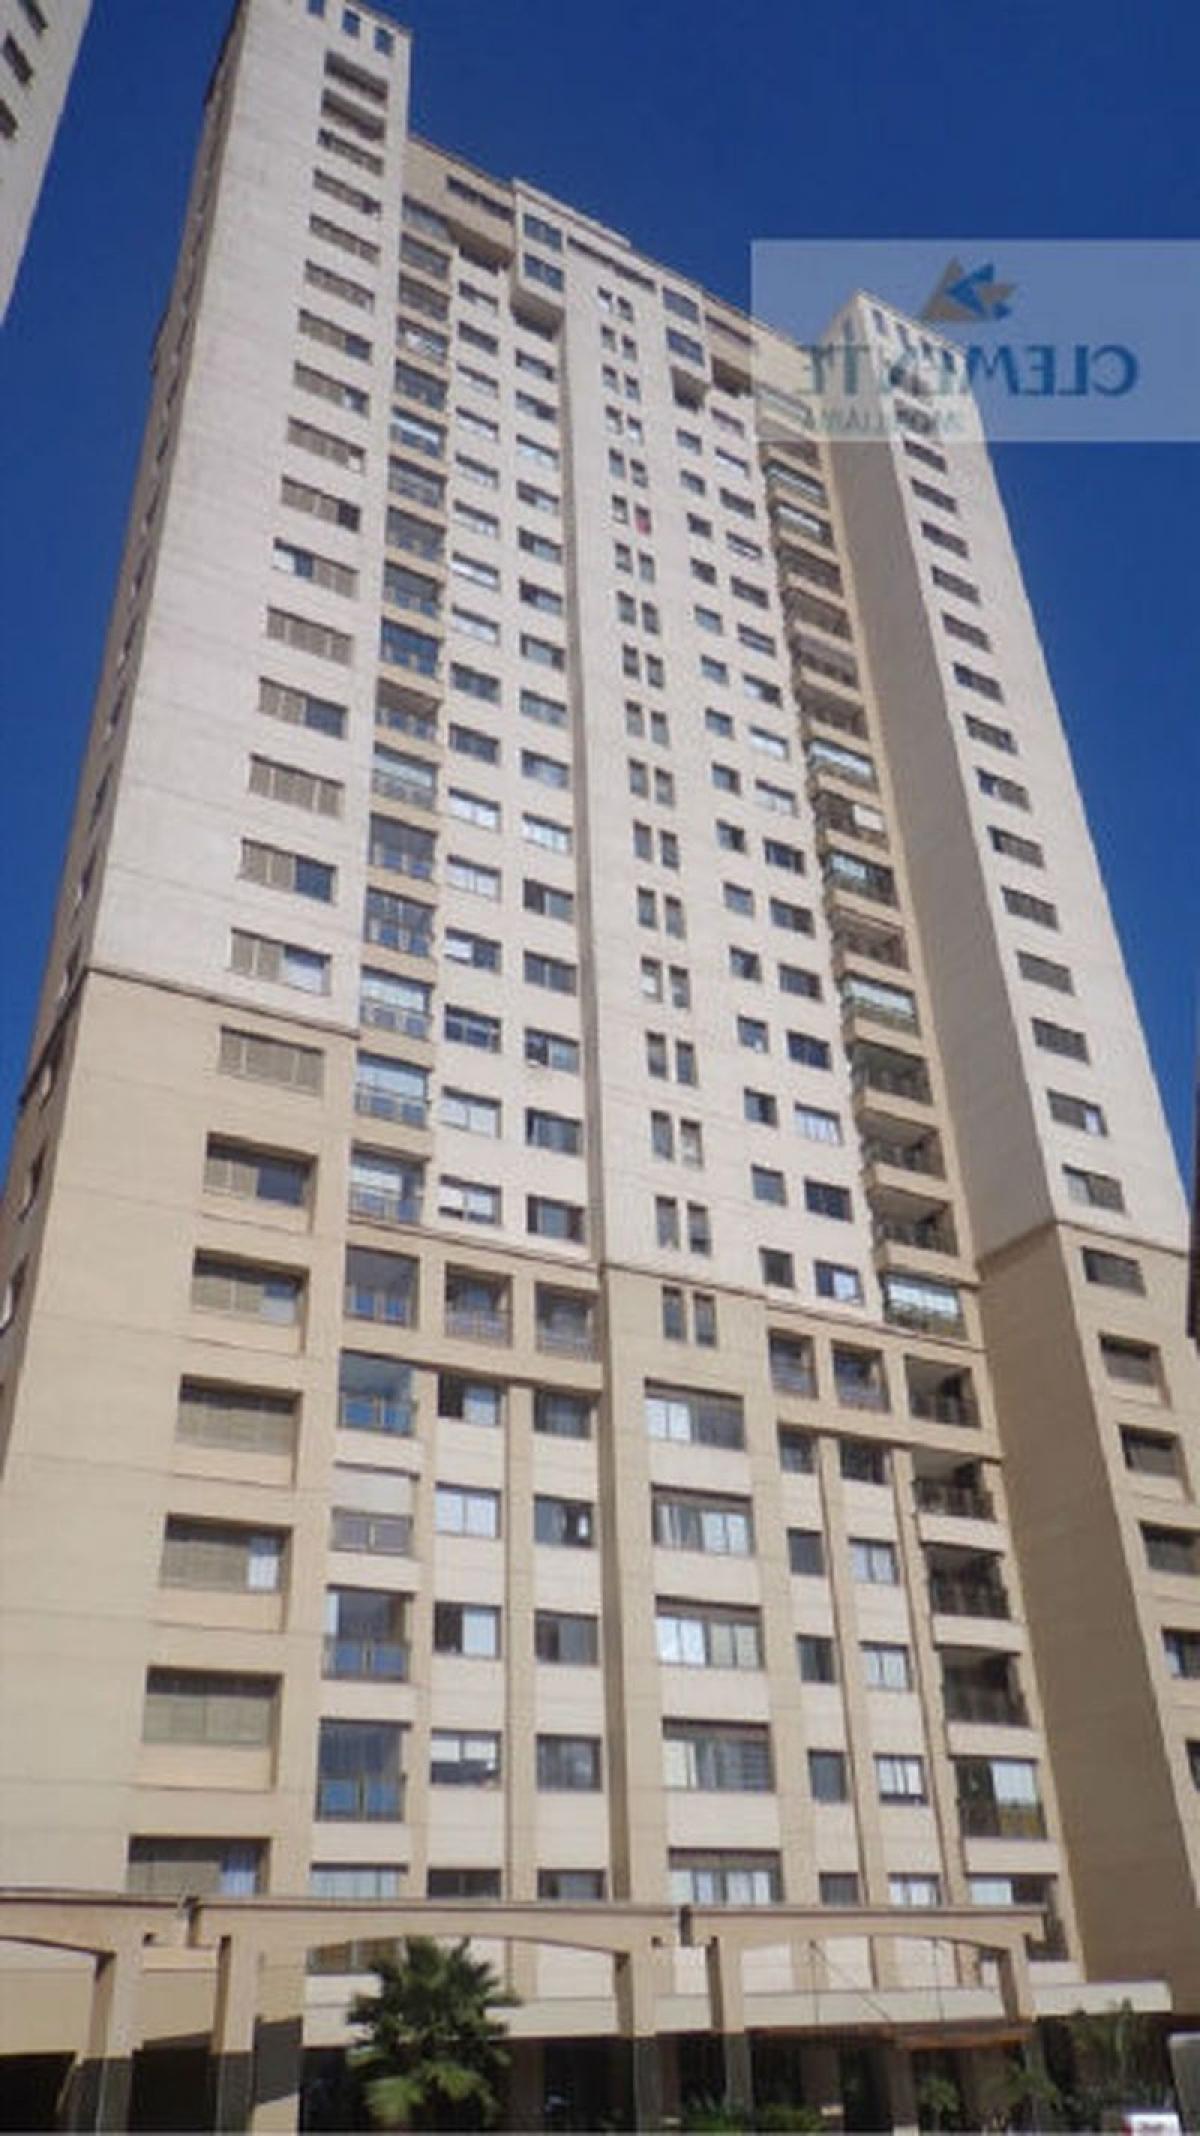 Picture of Apartment For Sale in Nova Lima, Minas Gerais, Brazil